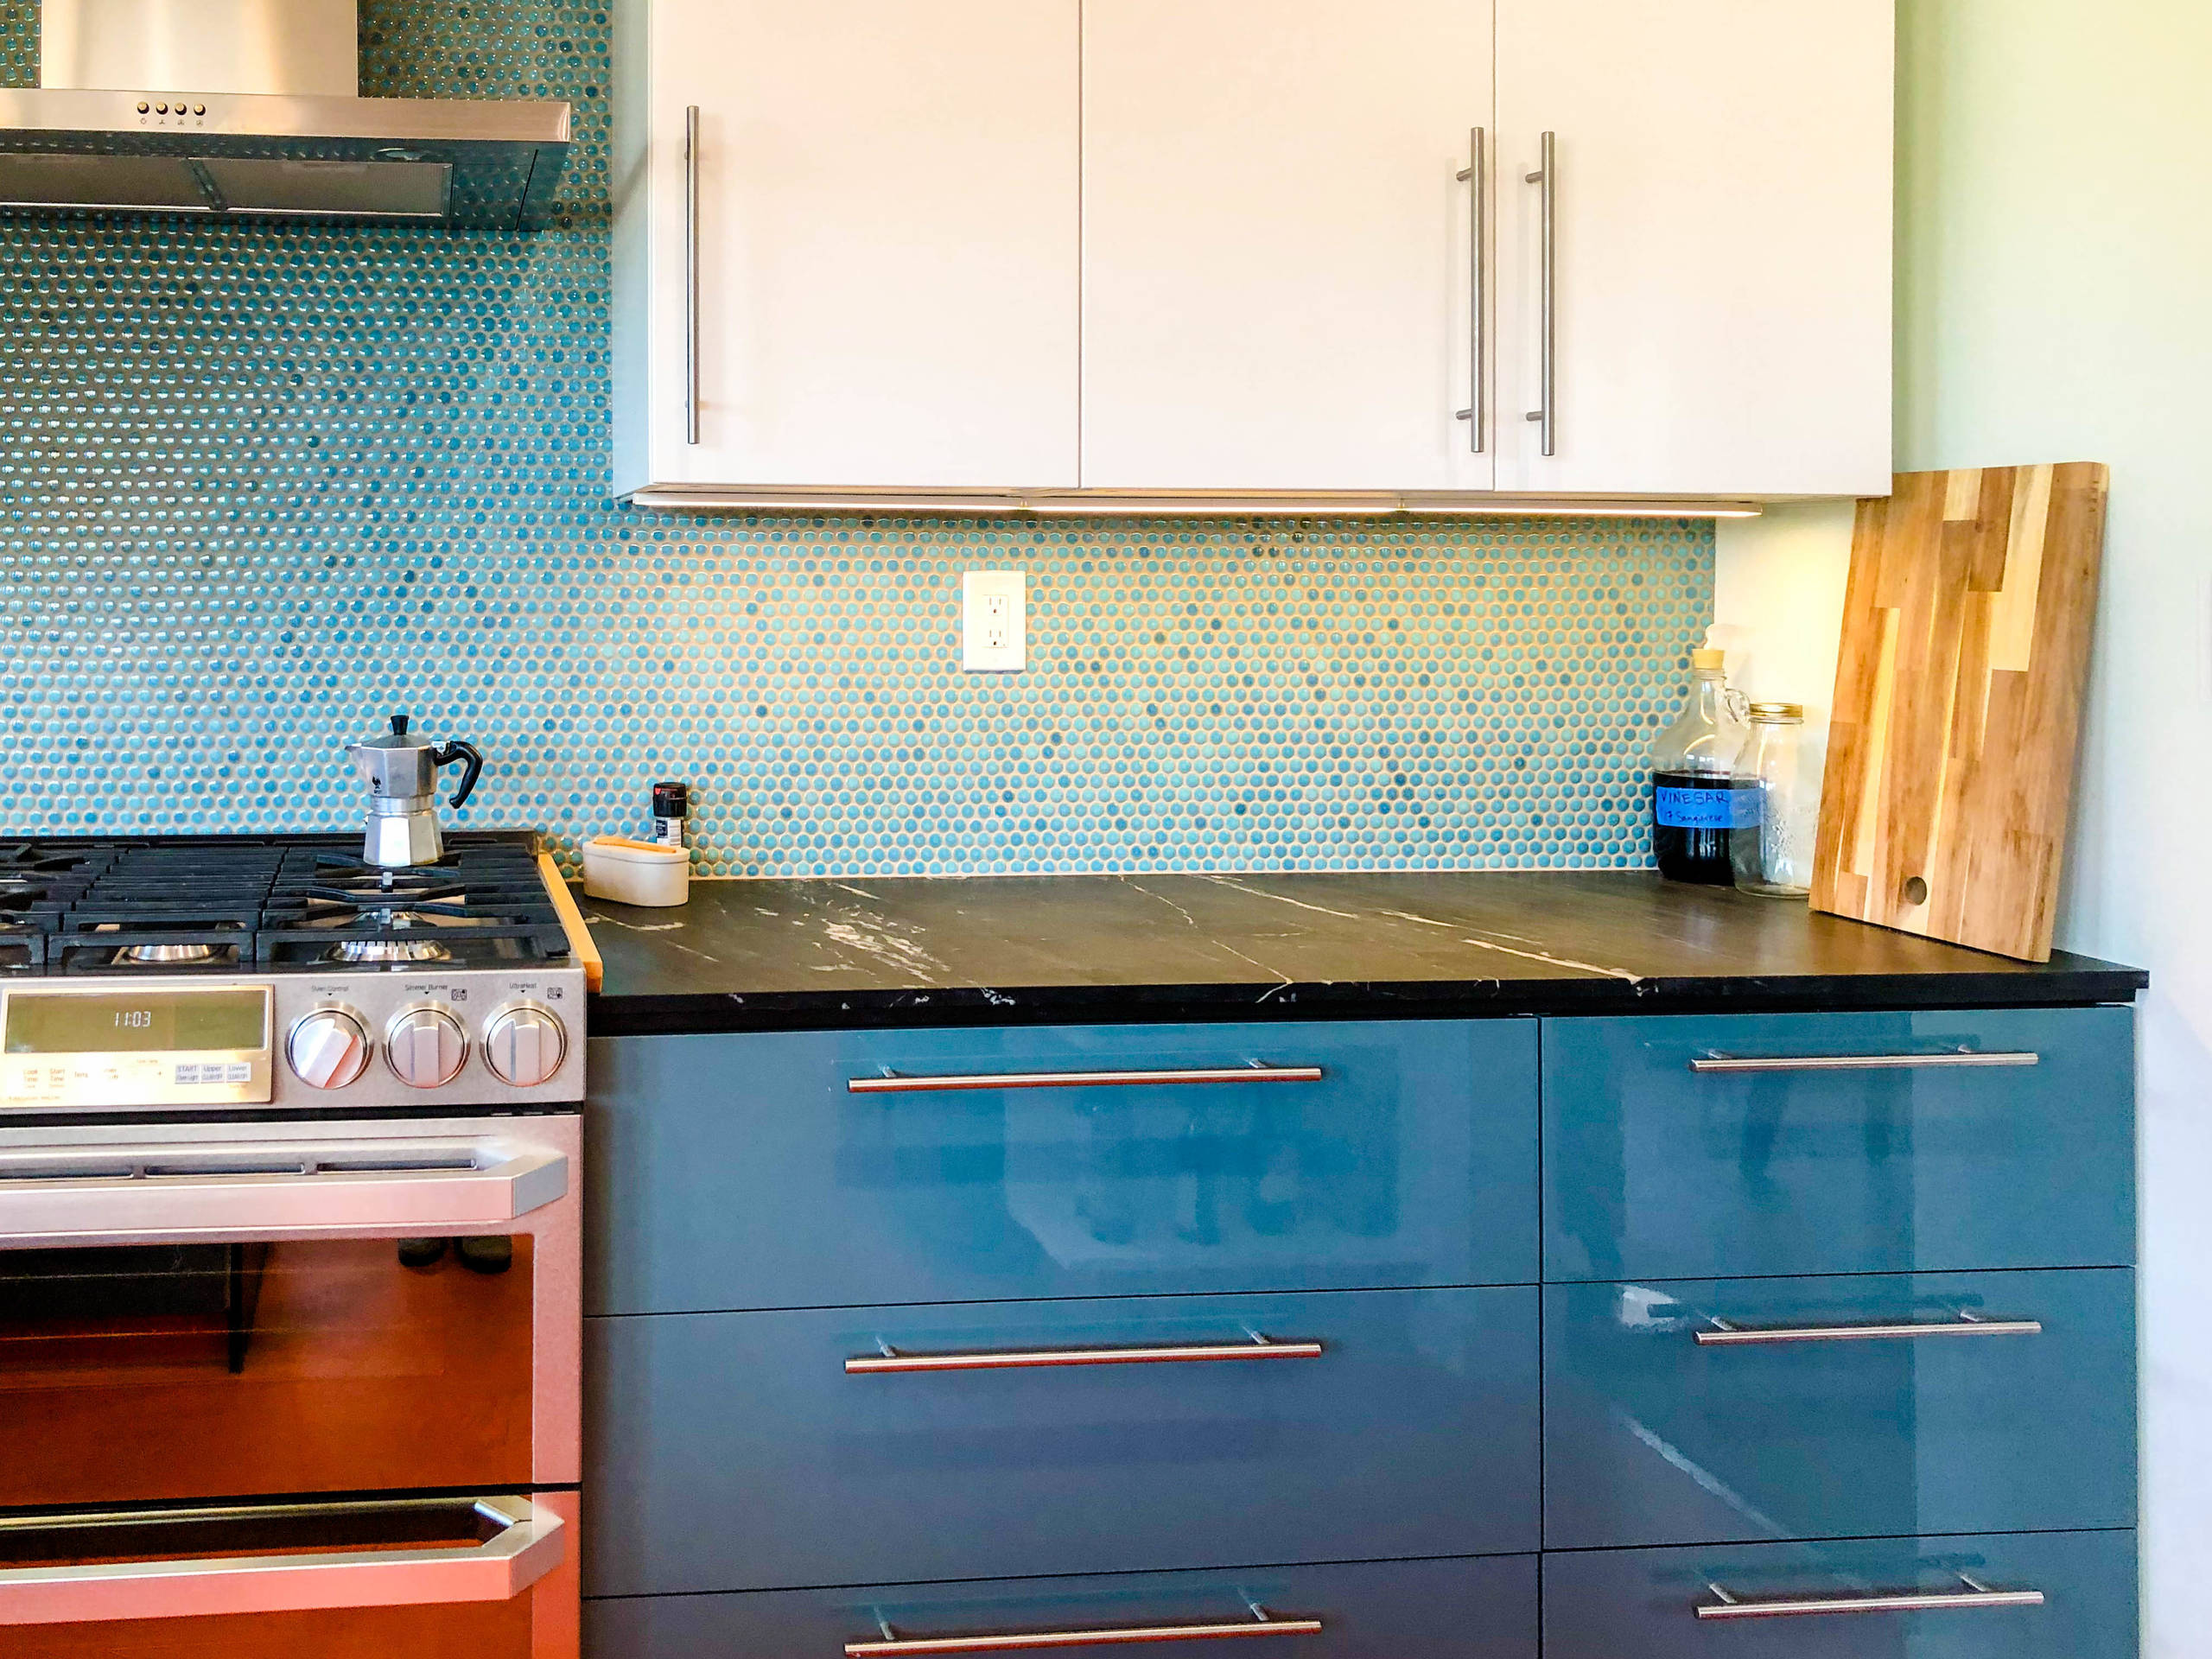 Cabinets, Countertops, Tile Backsplash & Paint / Complete Kitchen Remodel